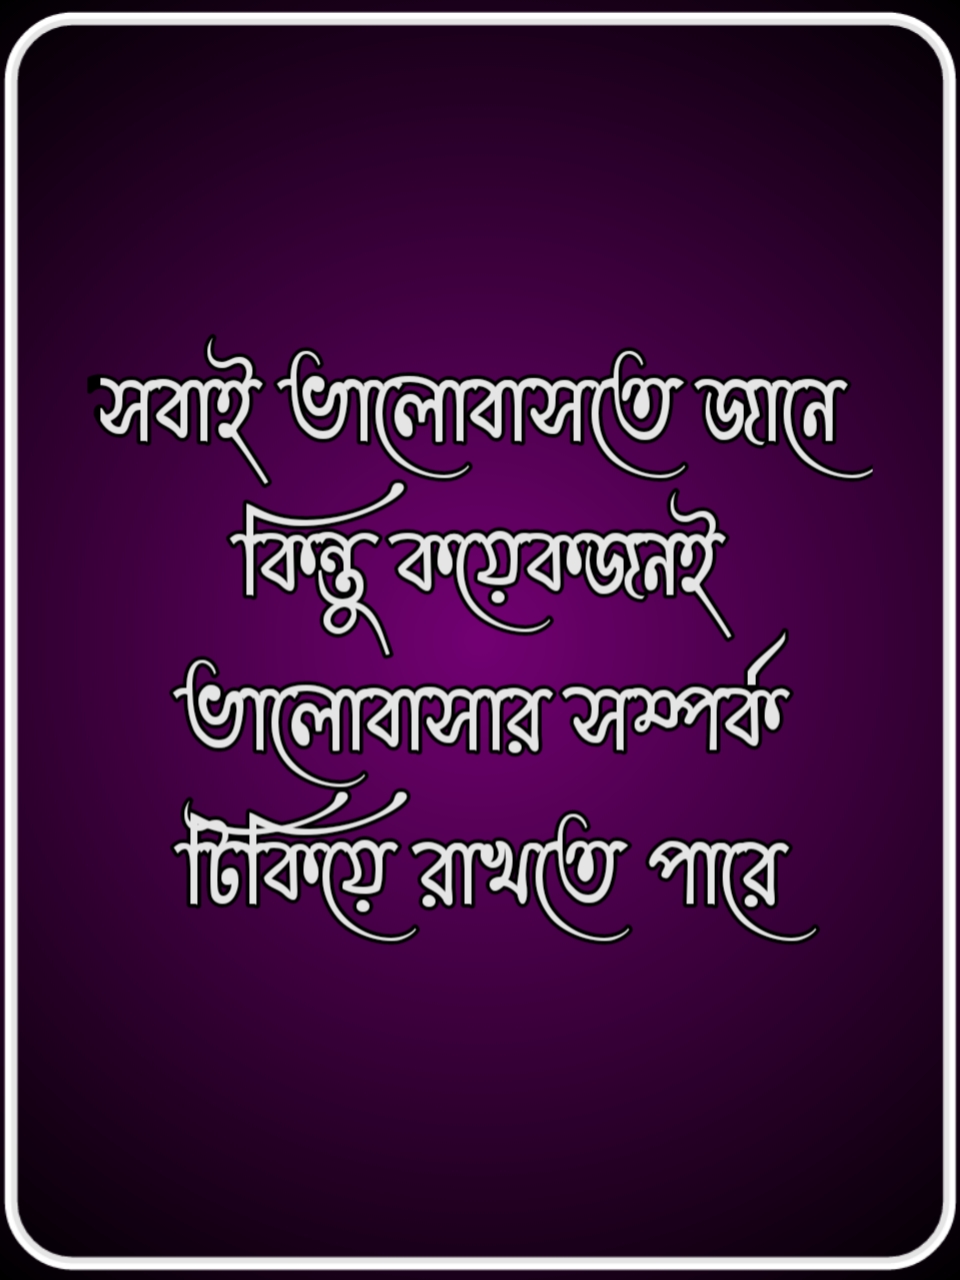 Bangla Status Pic, Love Status, Love Facebook Caption, Bangla Facebook Caption, ছন্দ লেখা ছবি, প্রেমের ছন্দ